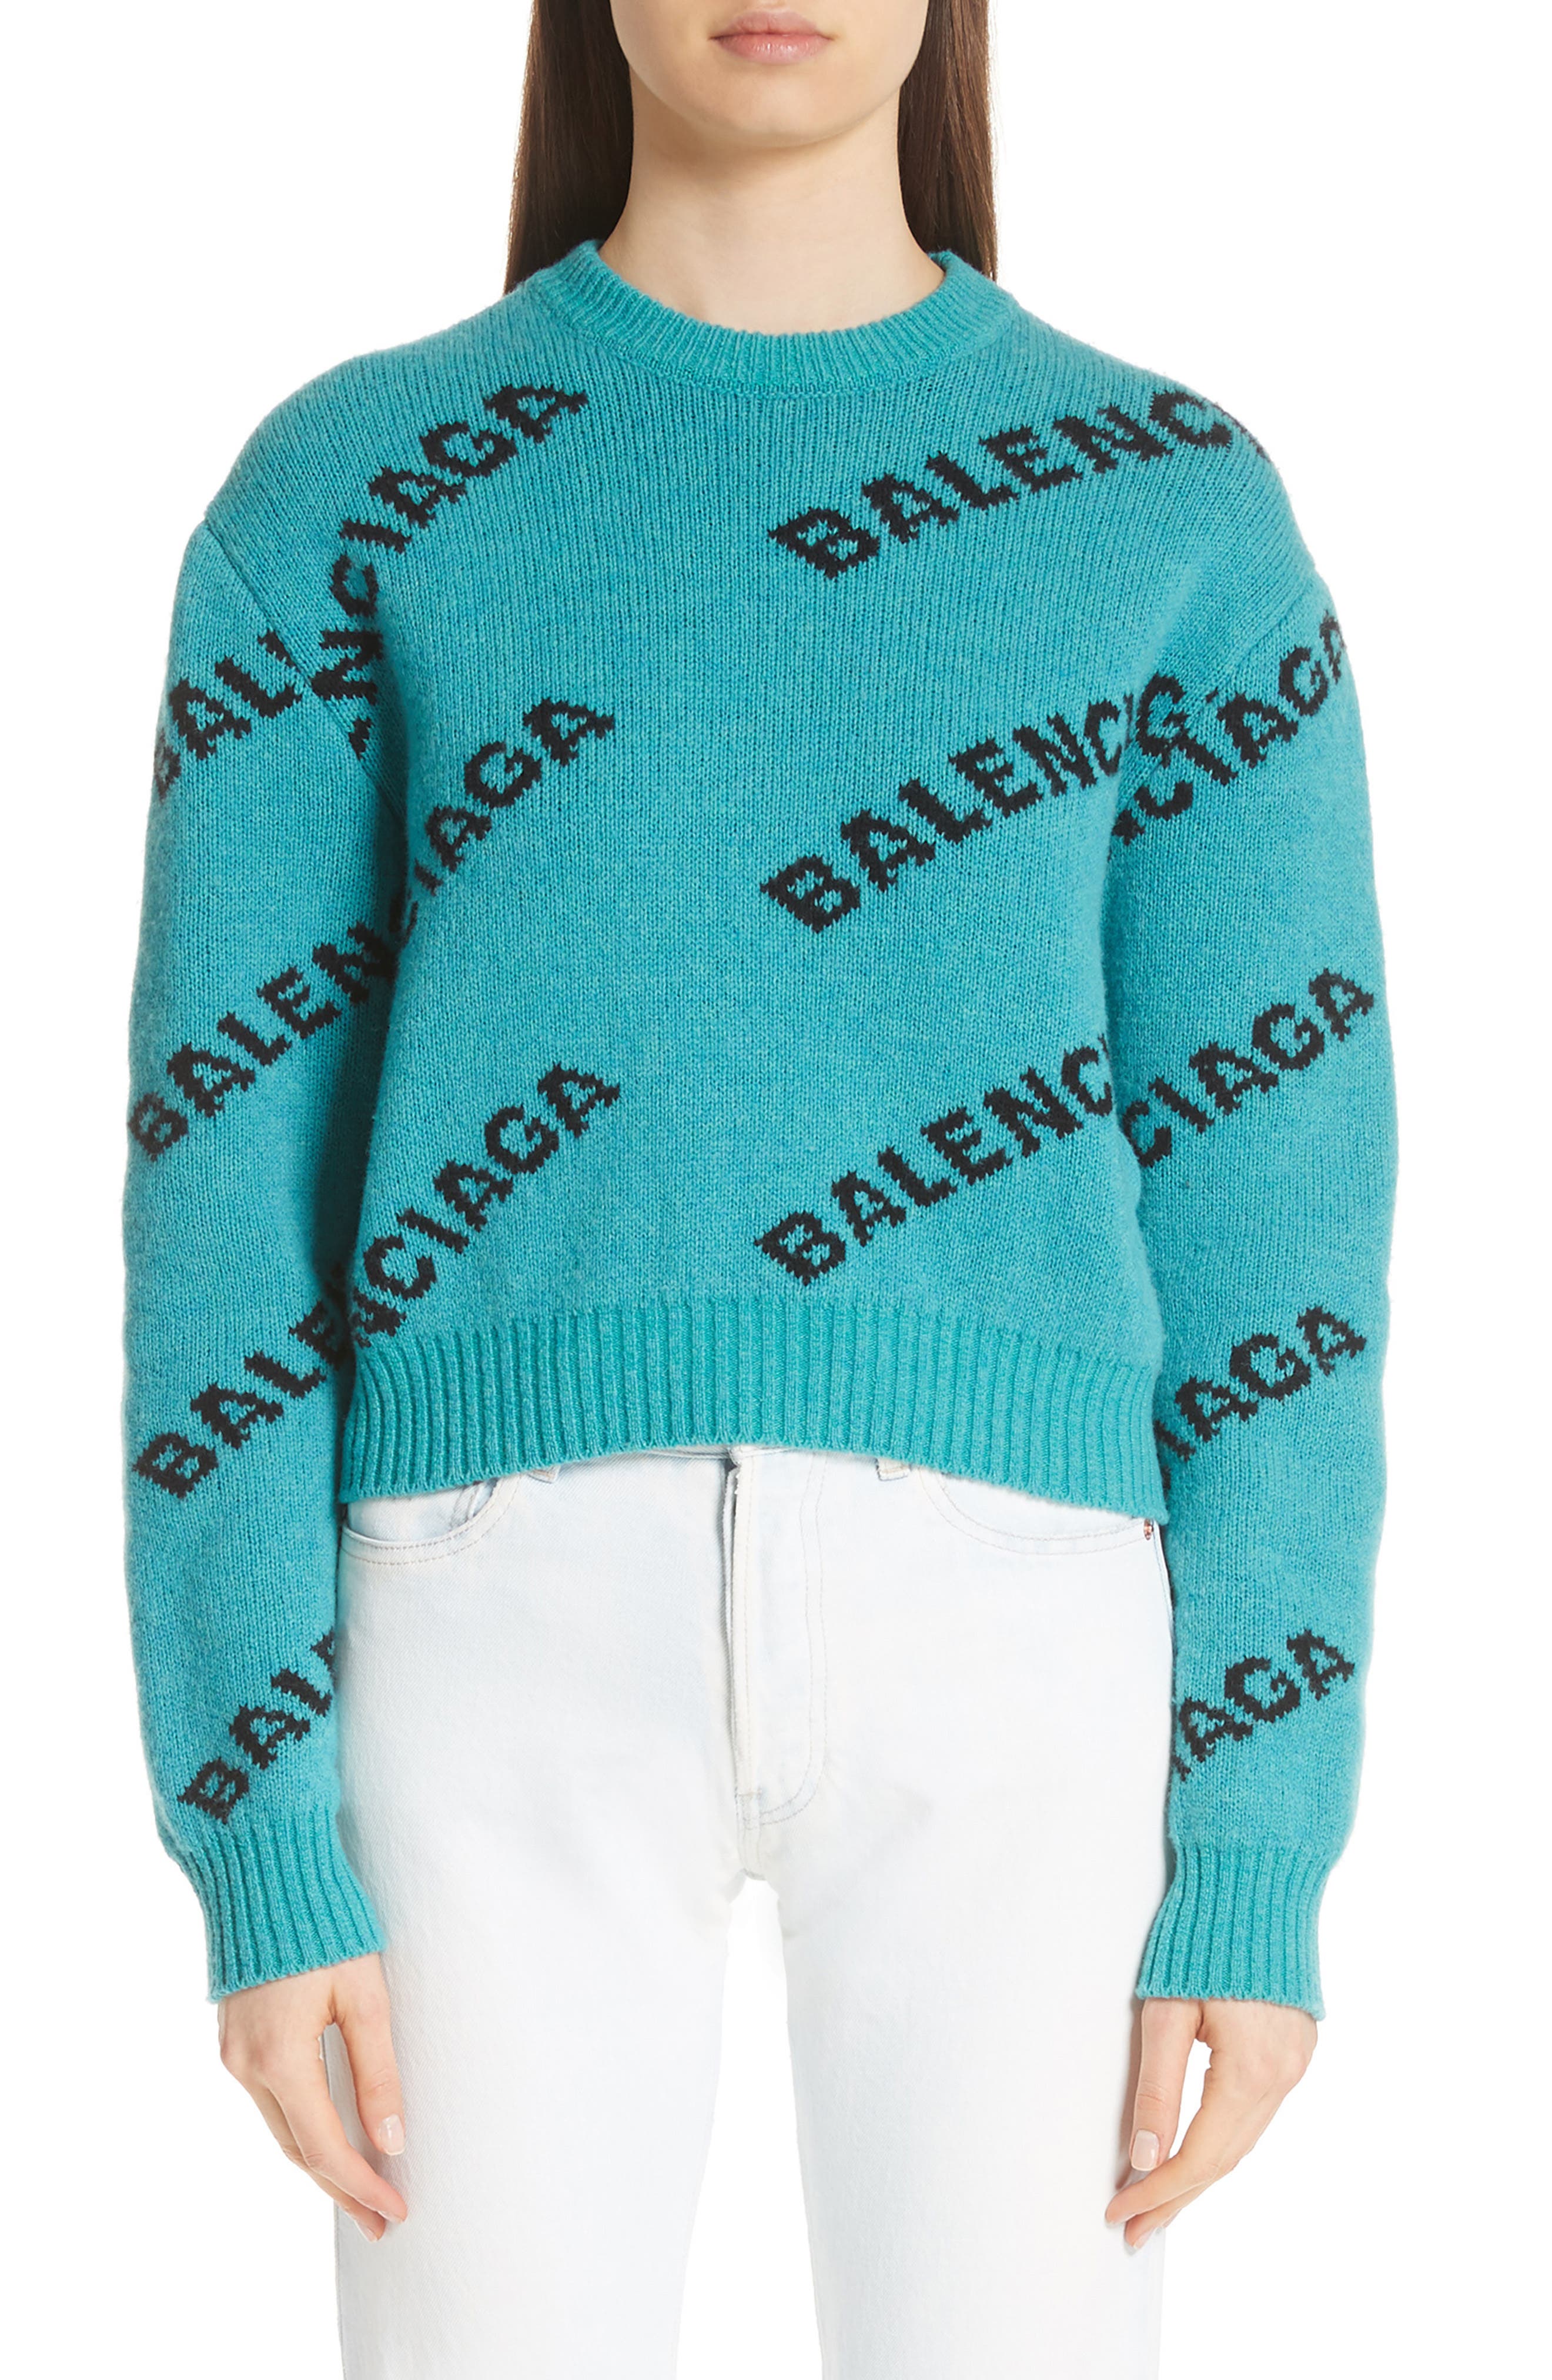 balenciaga wool logo sweater